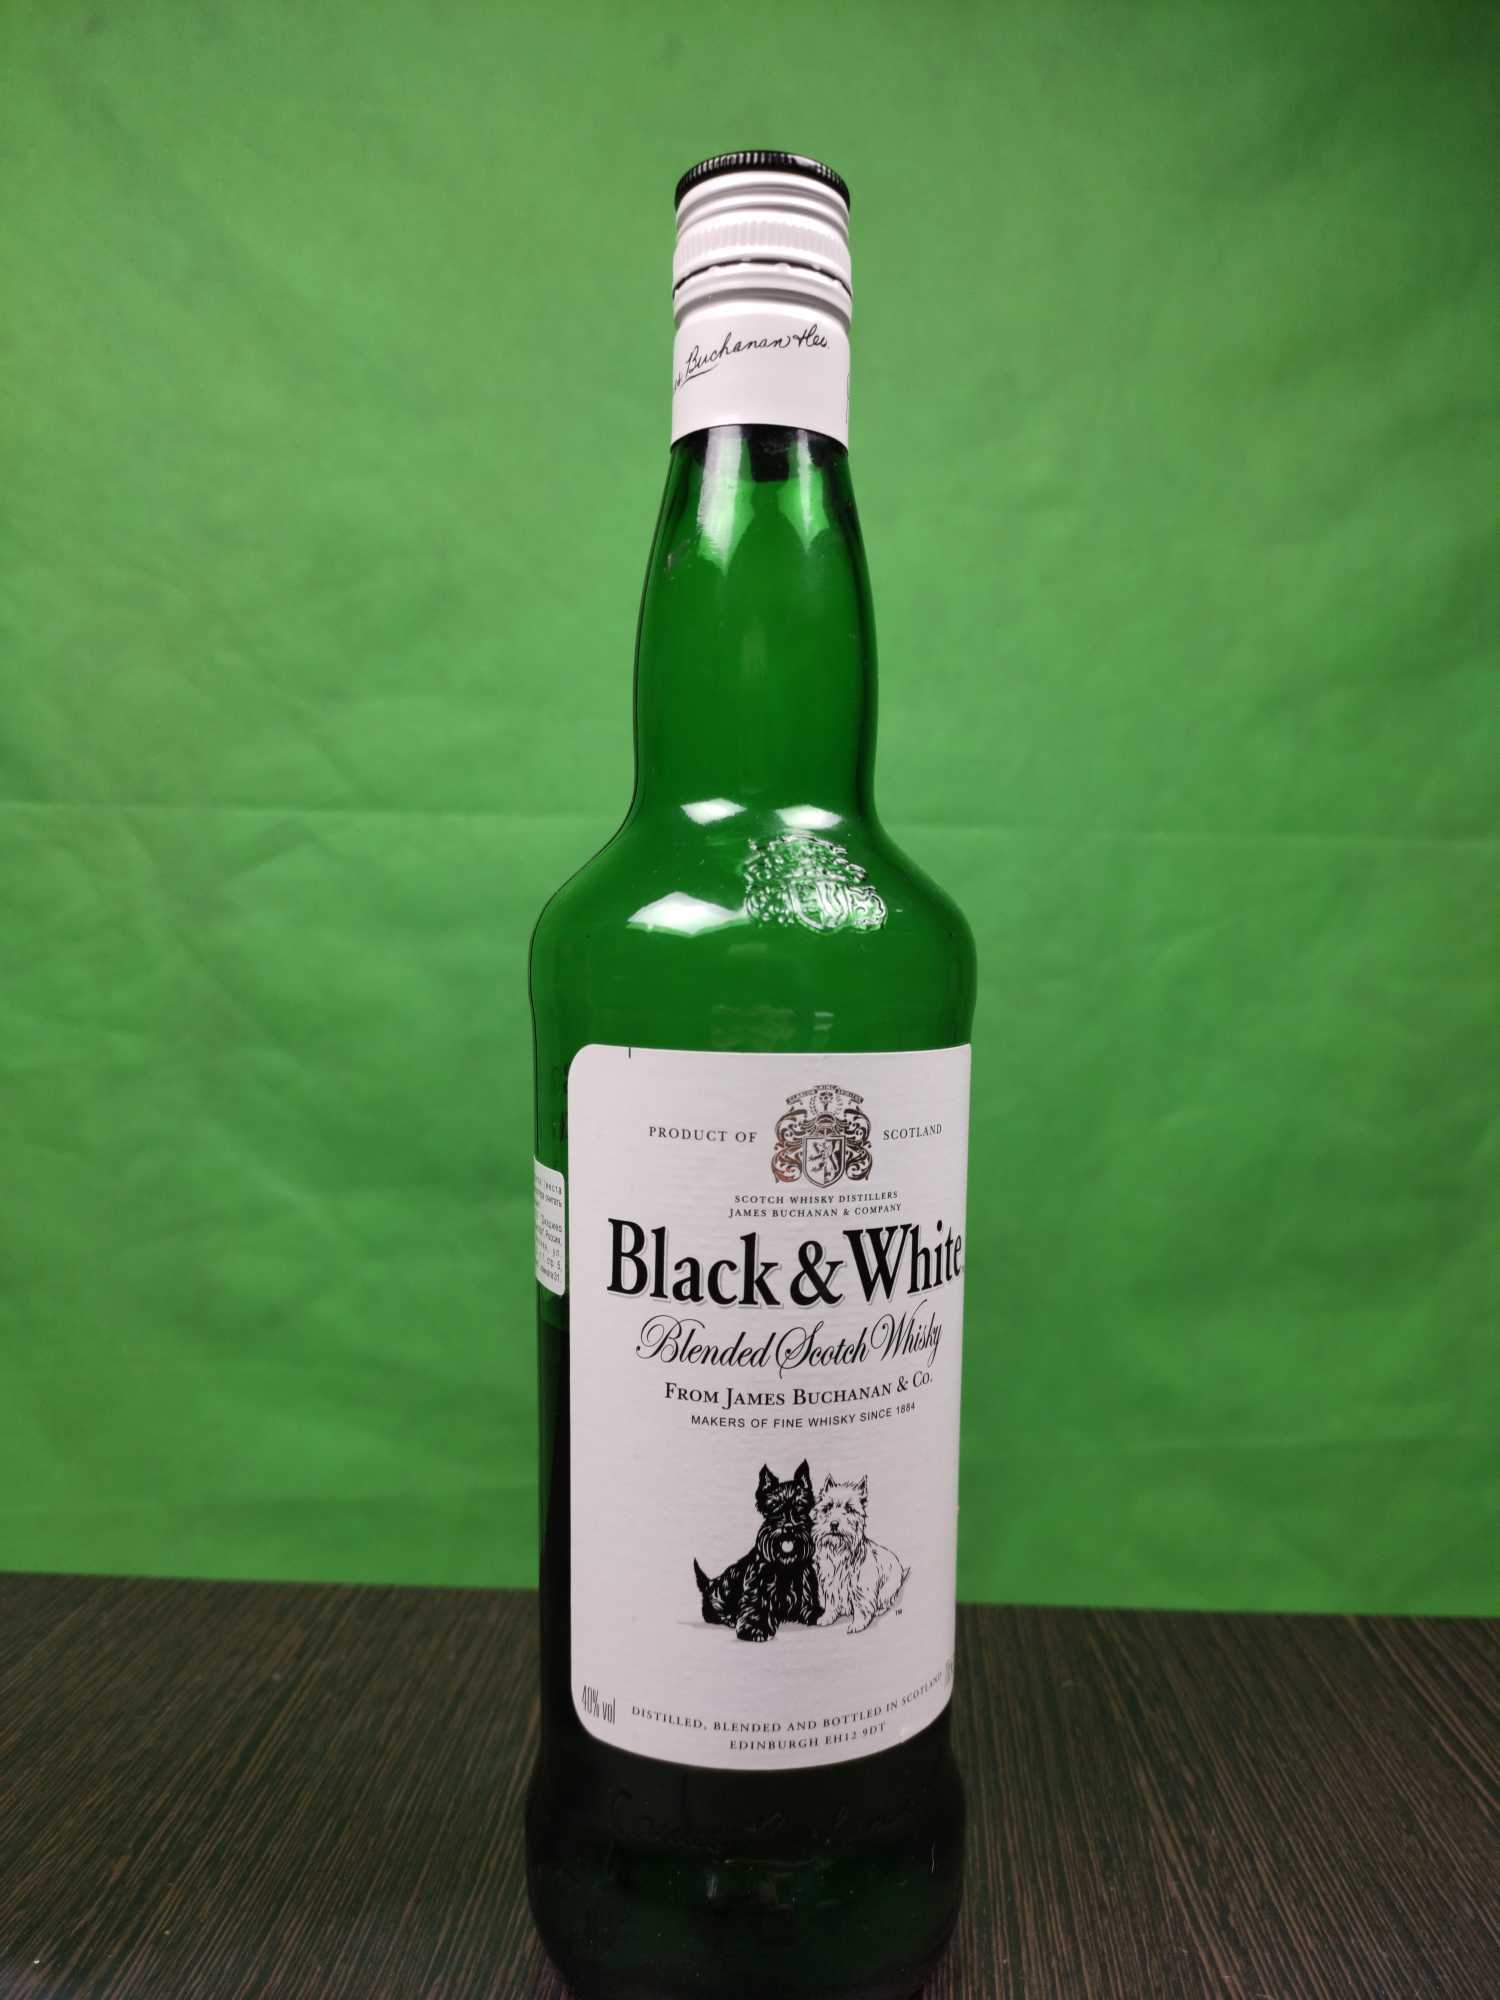 Виски black velvet reserve 8 летний отзывы, фото